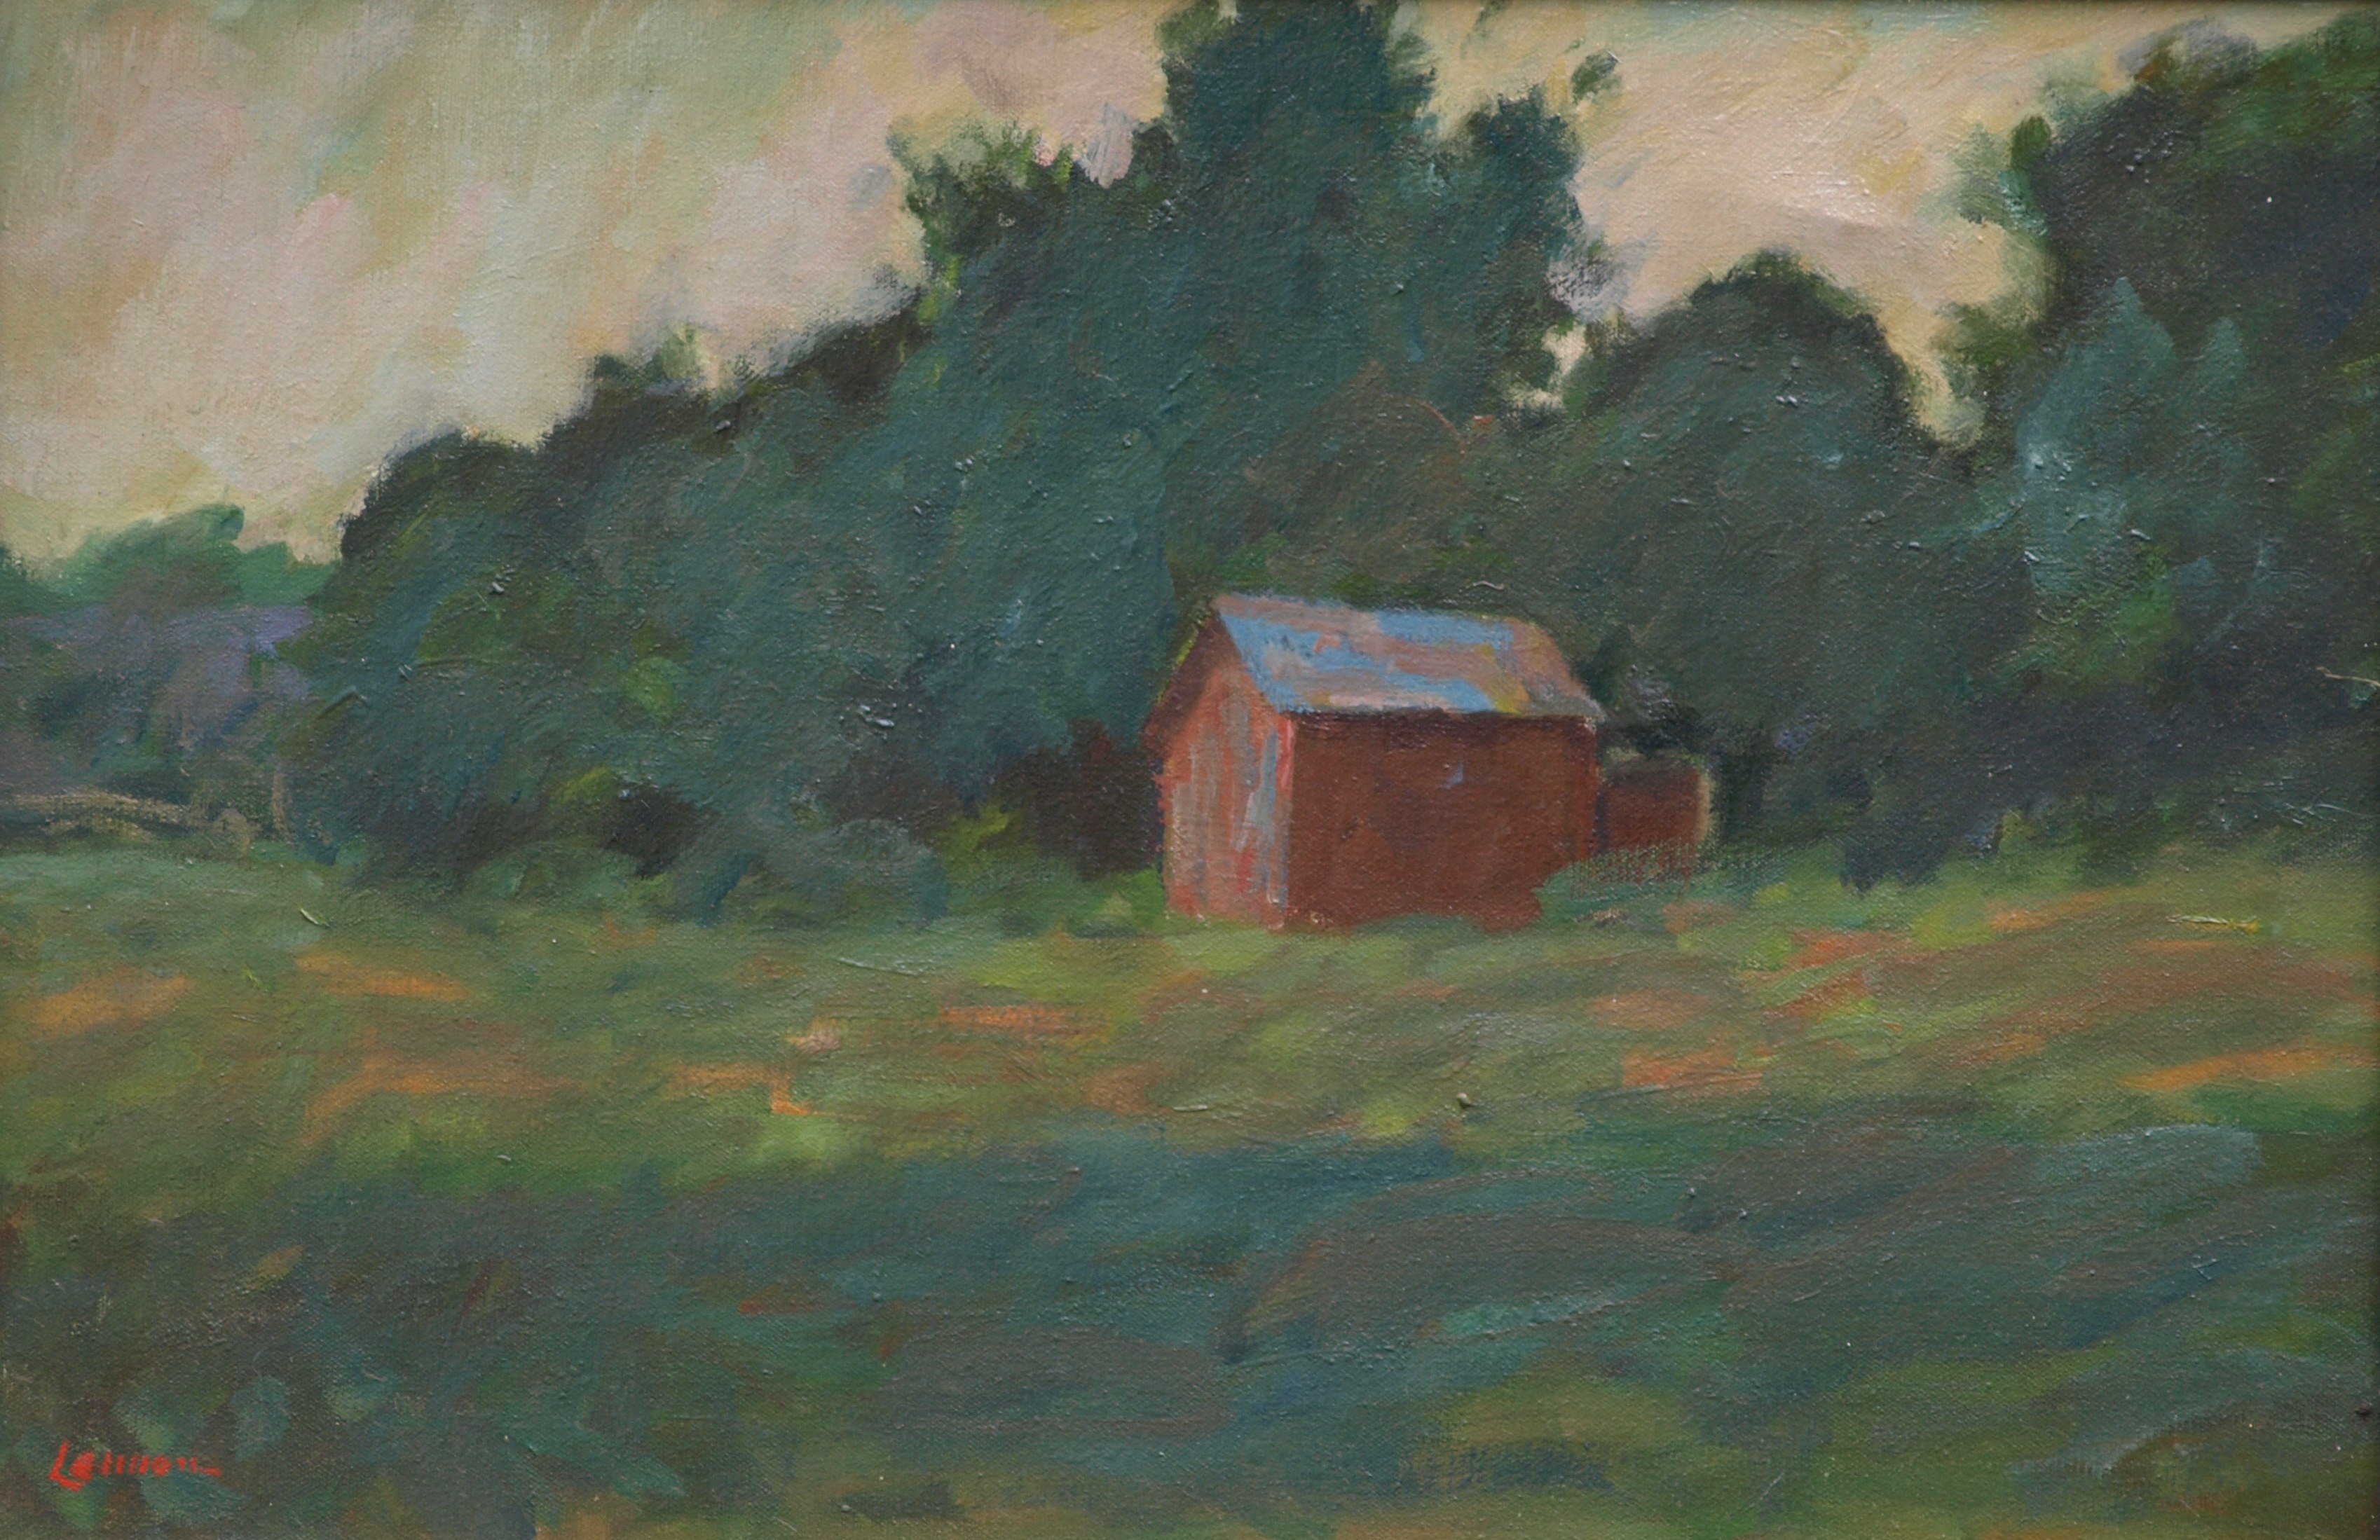 Lane's Barn, Oil on Canvas, 16 x 24 Inches, by Bernard Lennon, $650